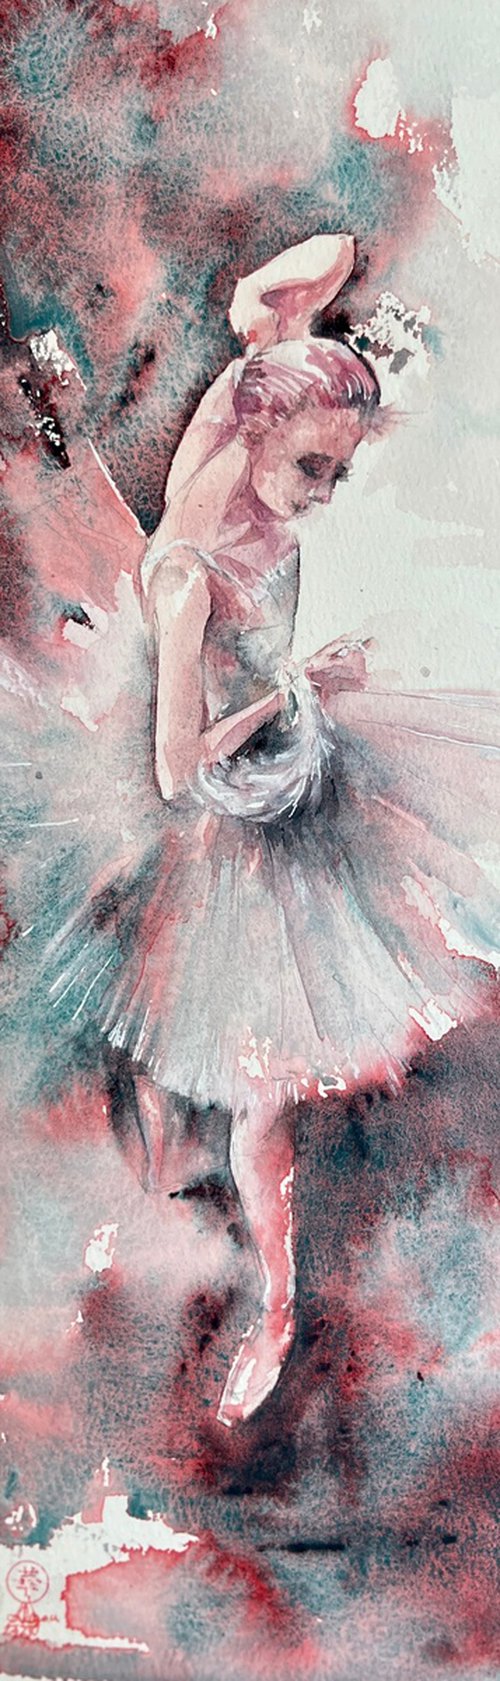 Corps de ballet#4 by Larissa Rogacheva